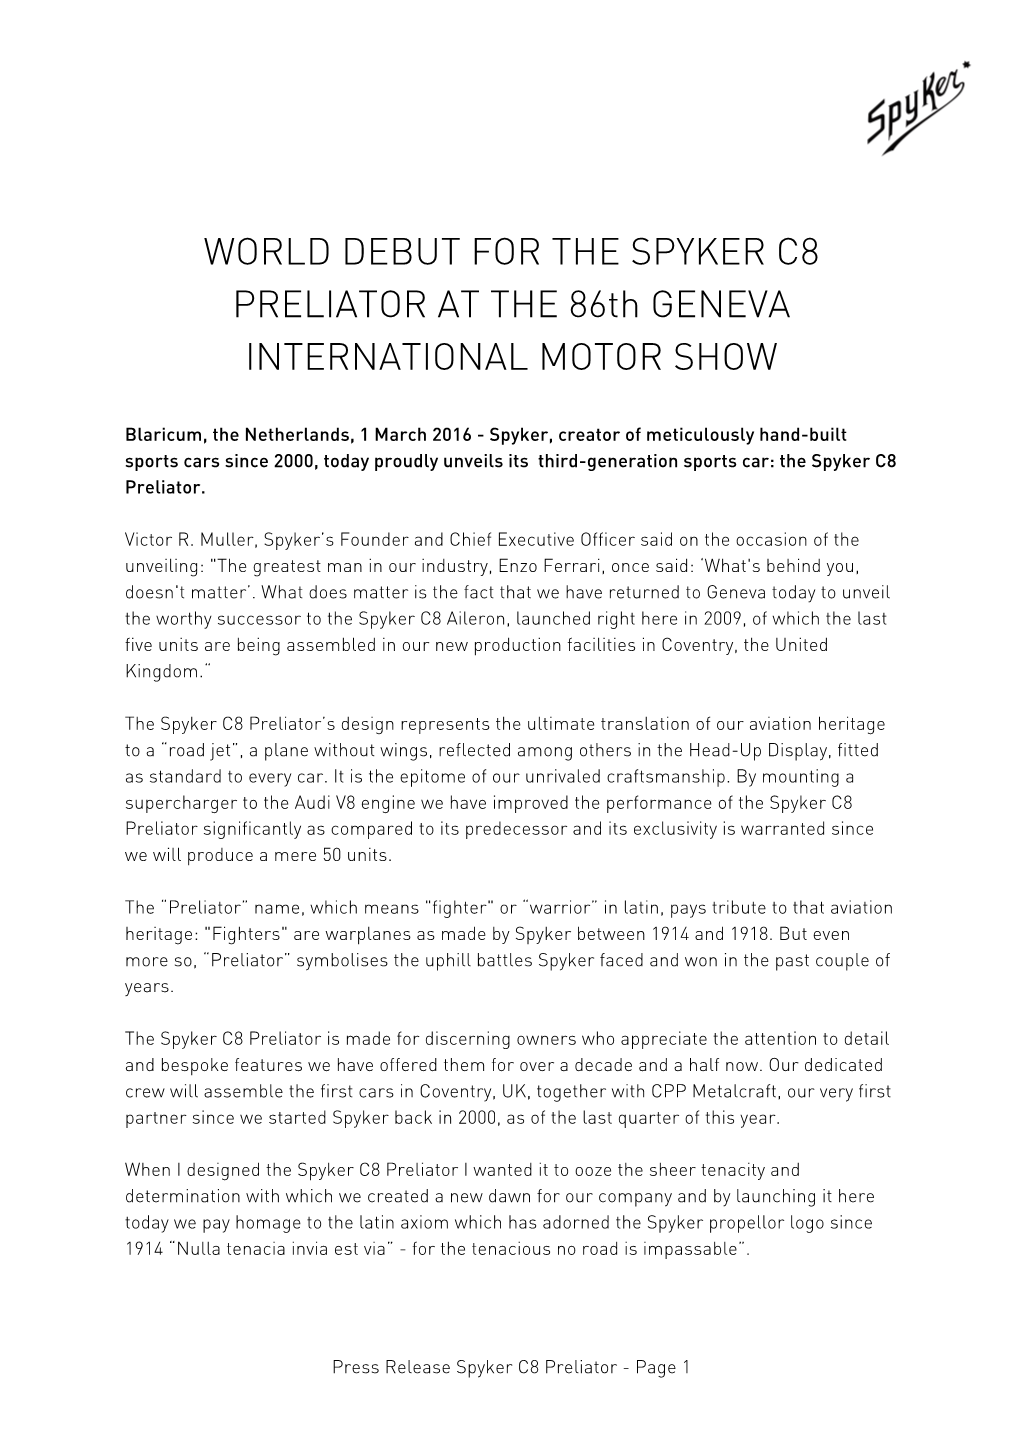 Press Release Spyker C8 Preliator - Page 1